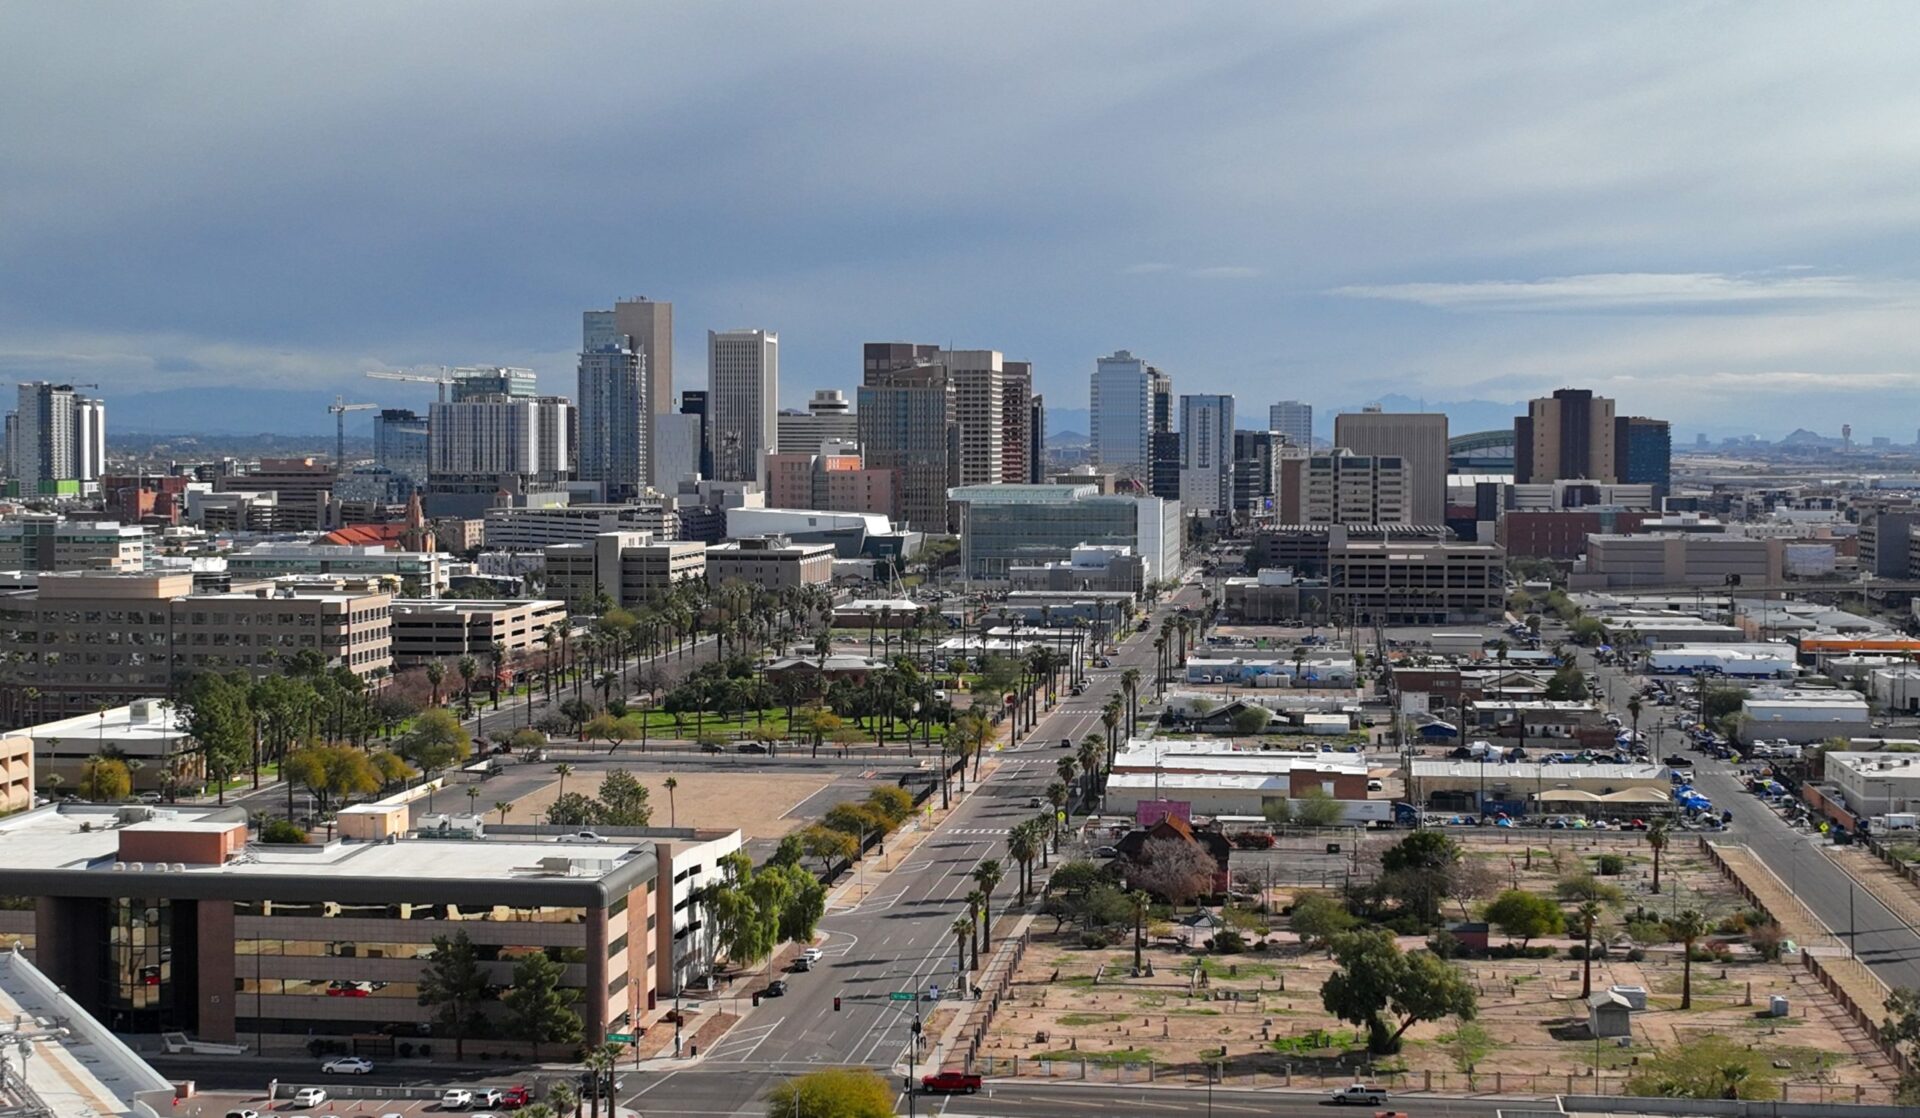 Phoenix Most Popular Moving Destination Despite Prices, Heat